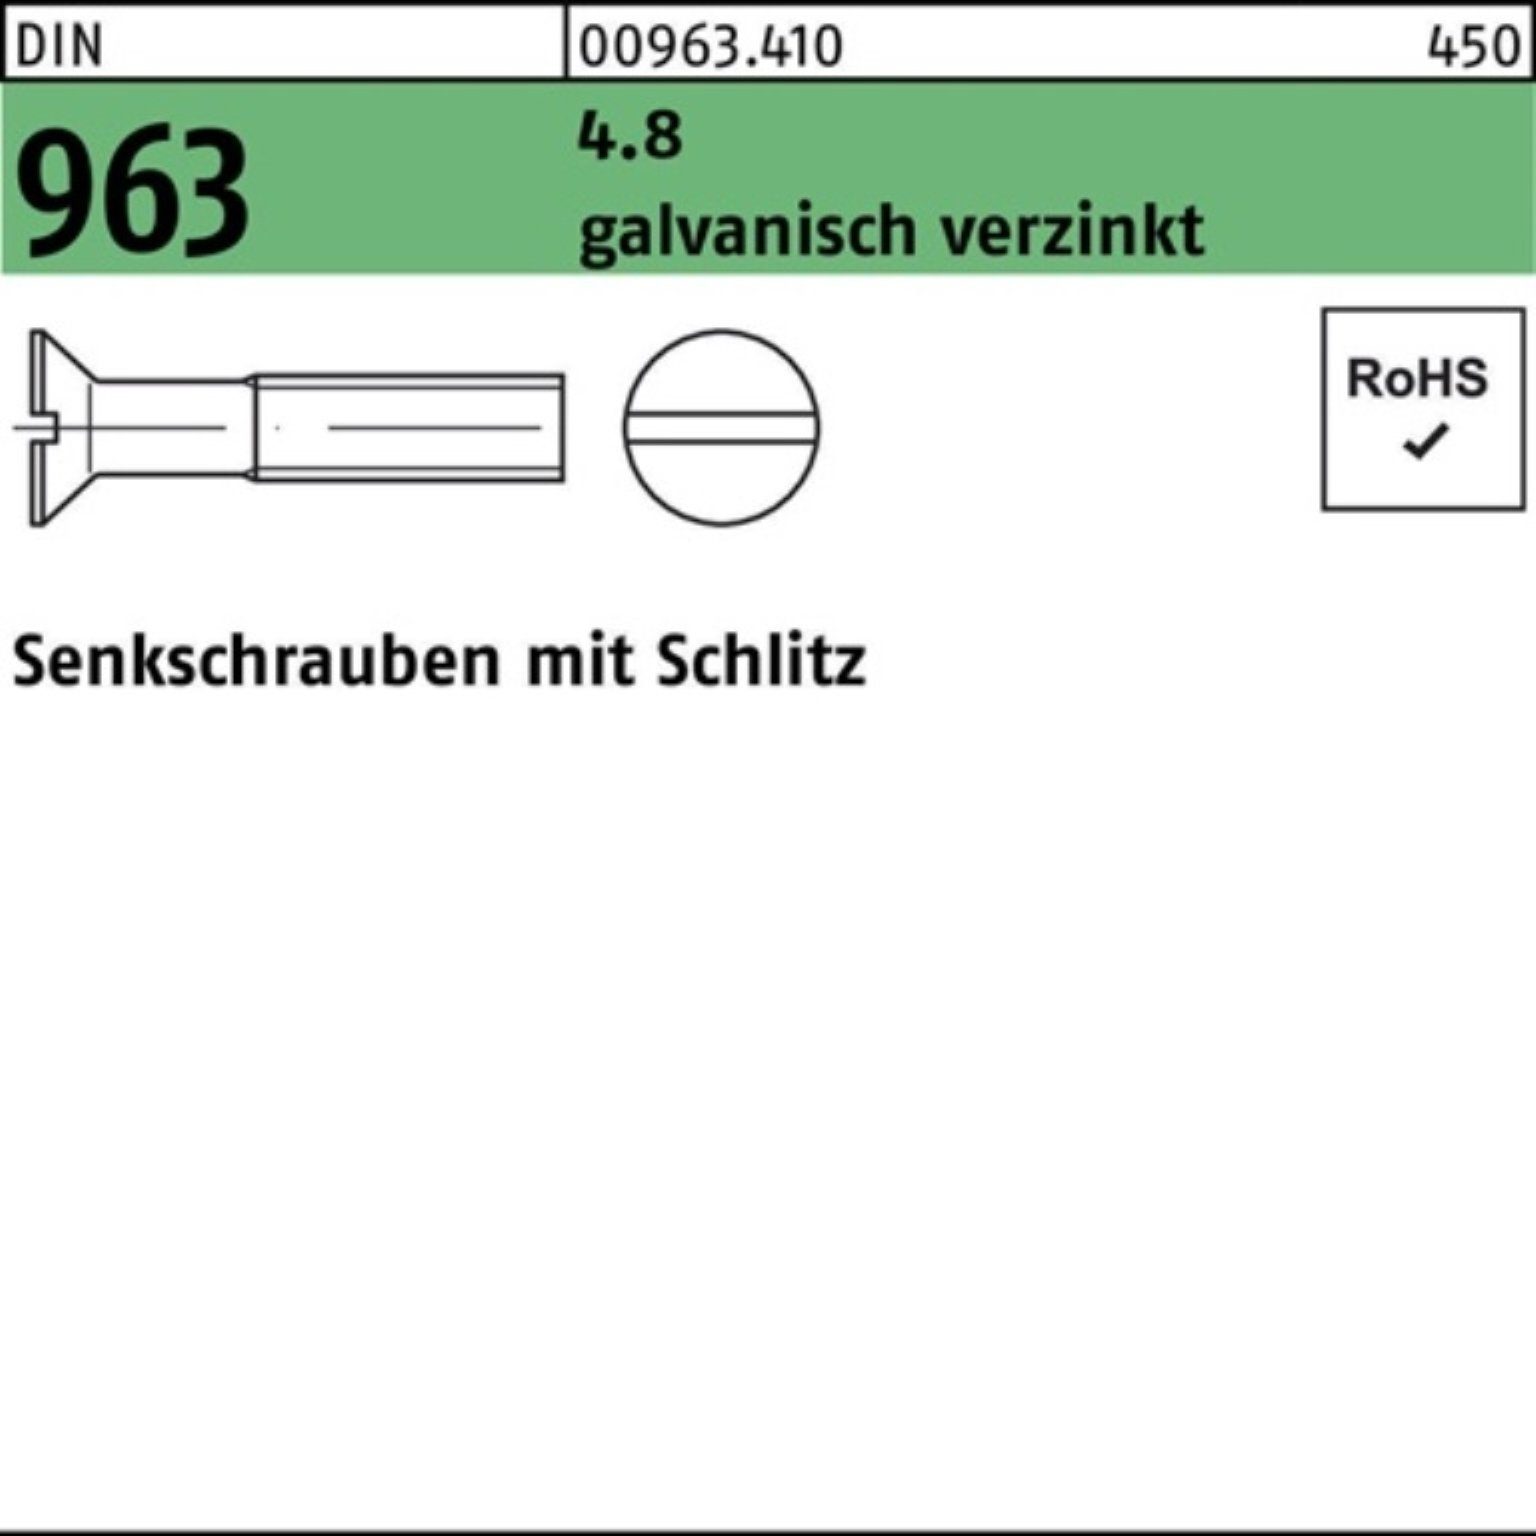 Reyher Senkschraube 100er Pack Senkschraube DIN 963 Schlitz M8x 40 4.8 galv.verz. 100 Stü